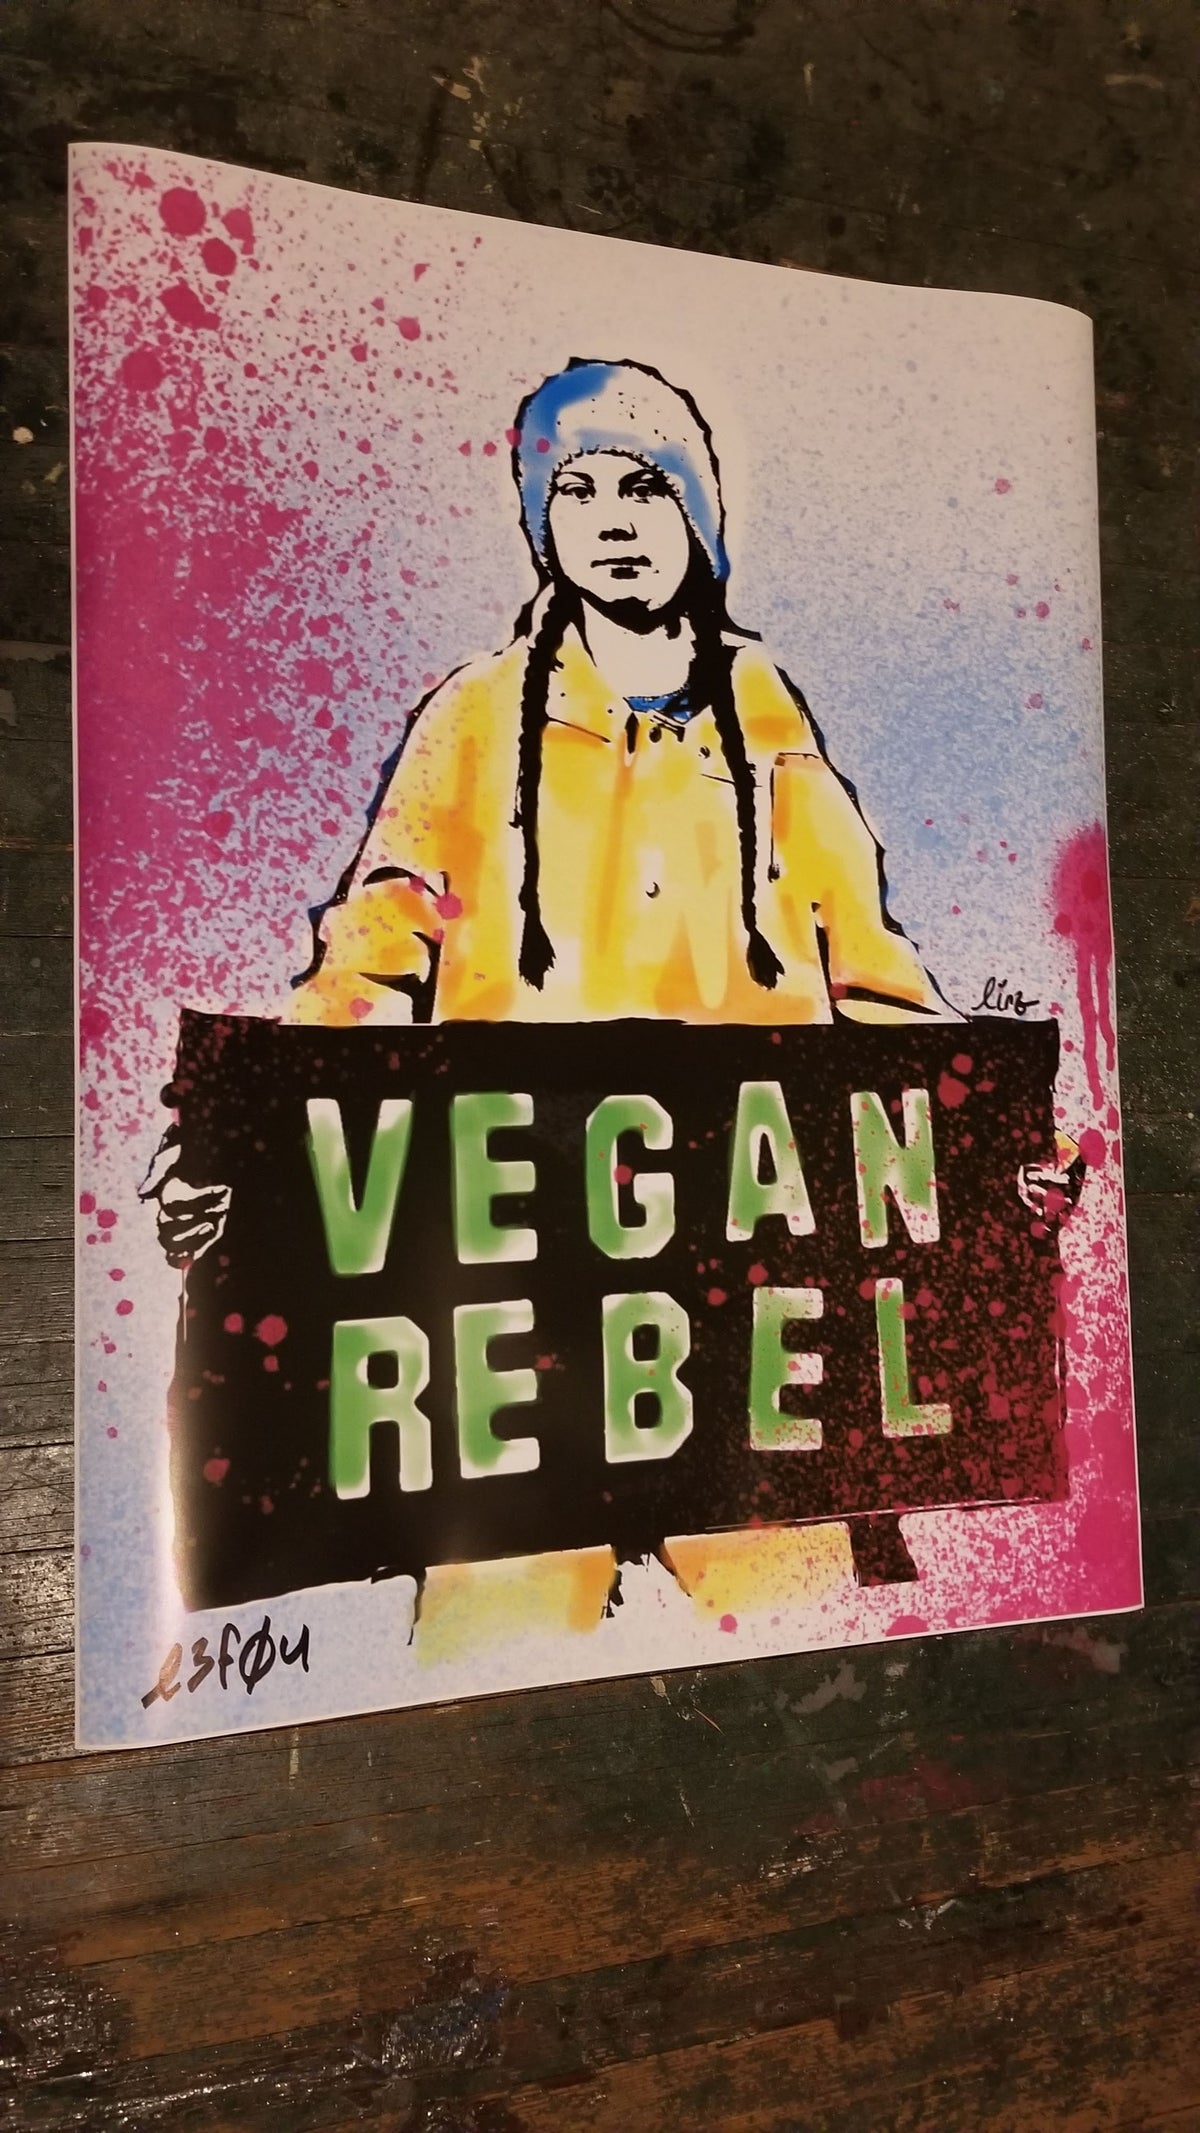 Ltd Edition Greta Thunberg Poster or Newsprint collab with Lindsay Lewis